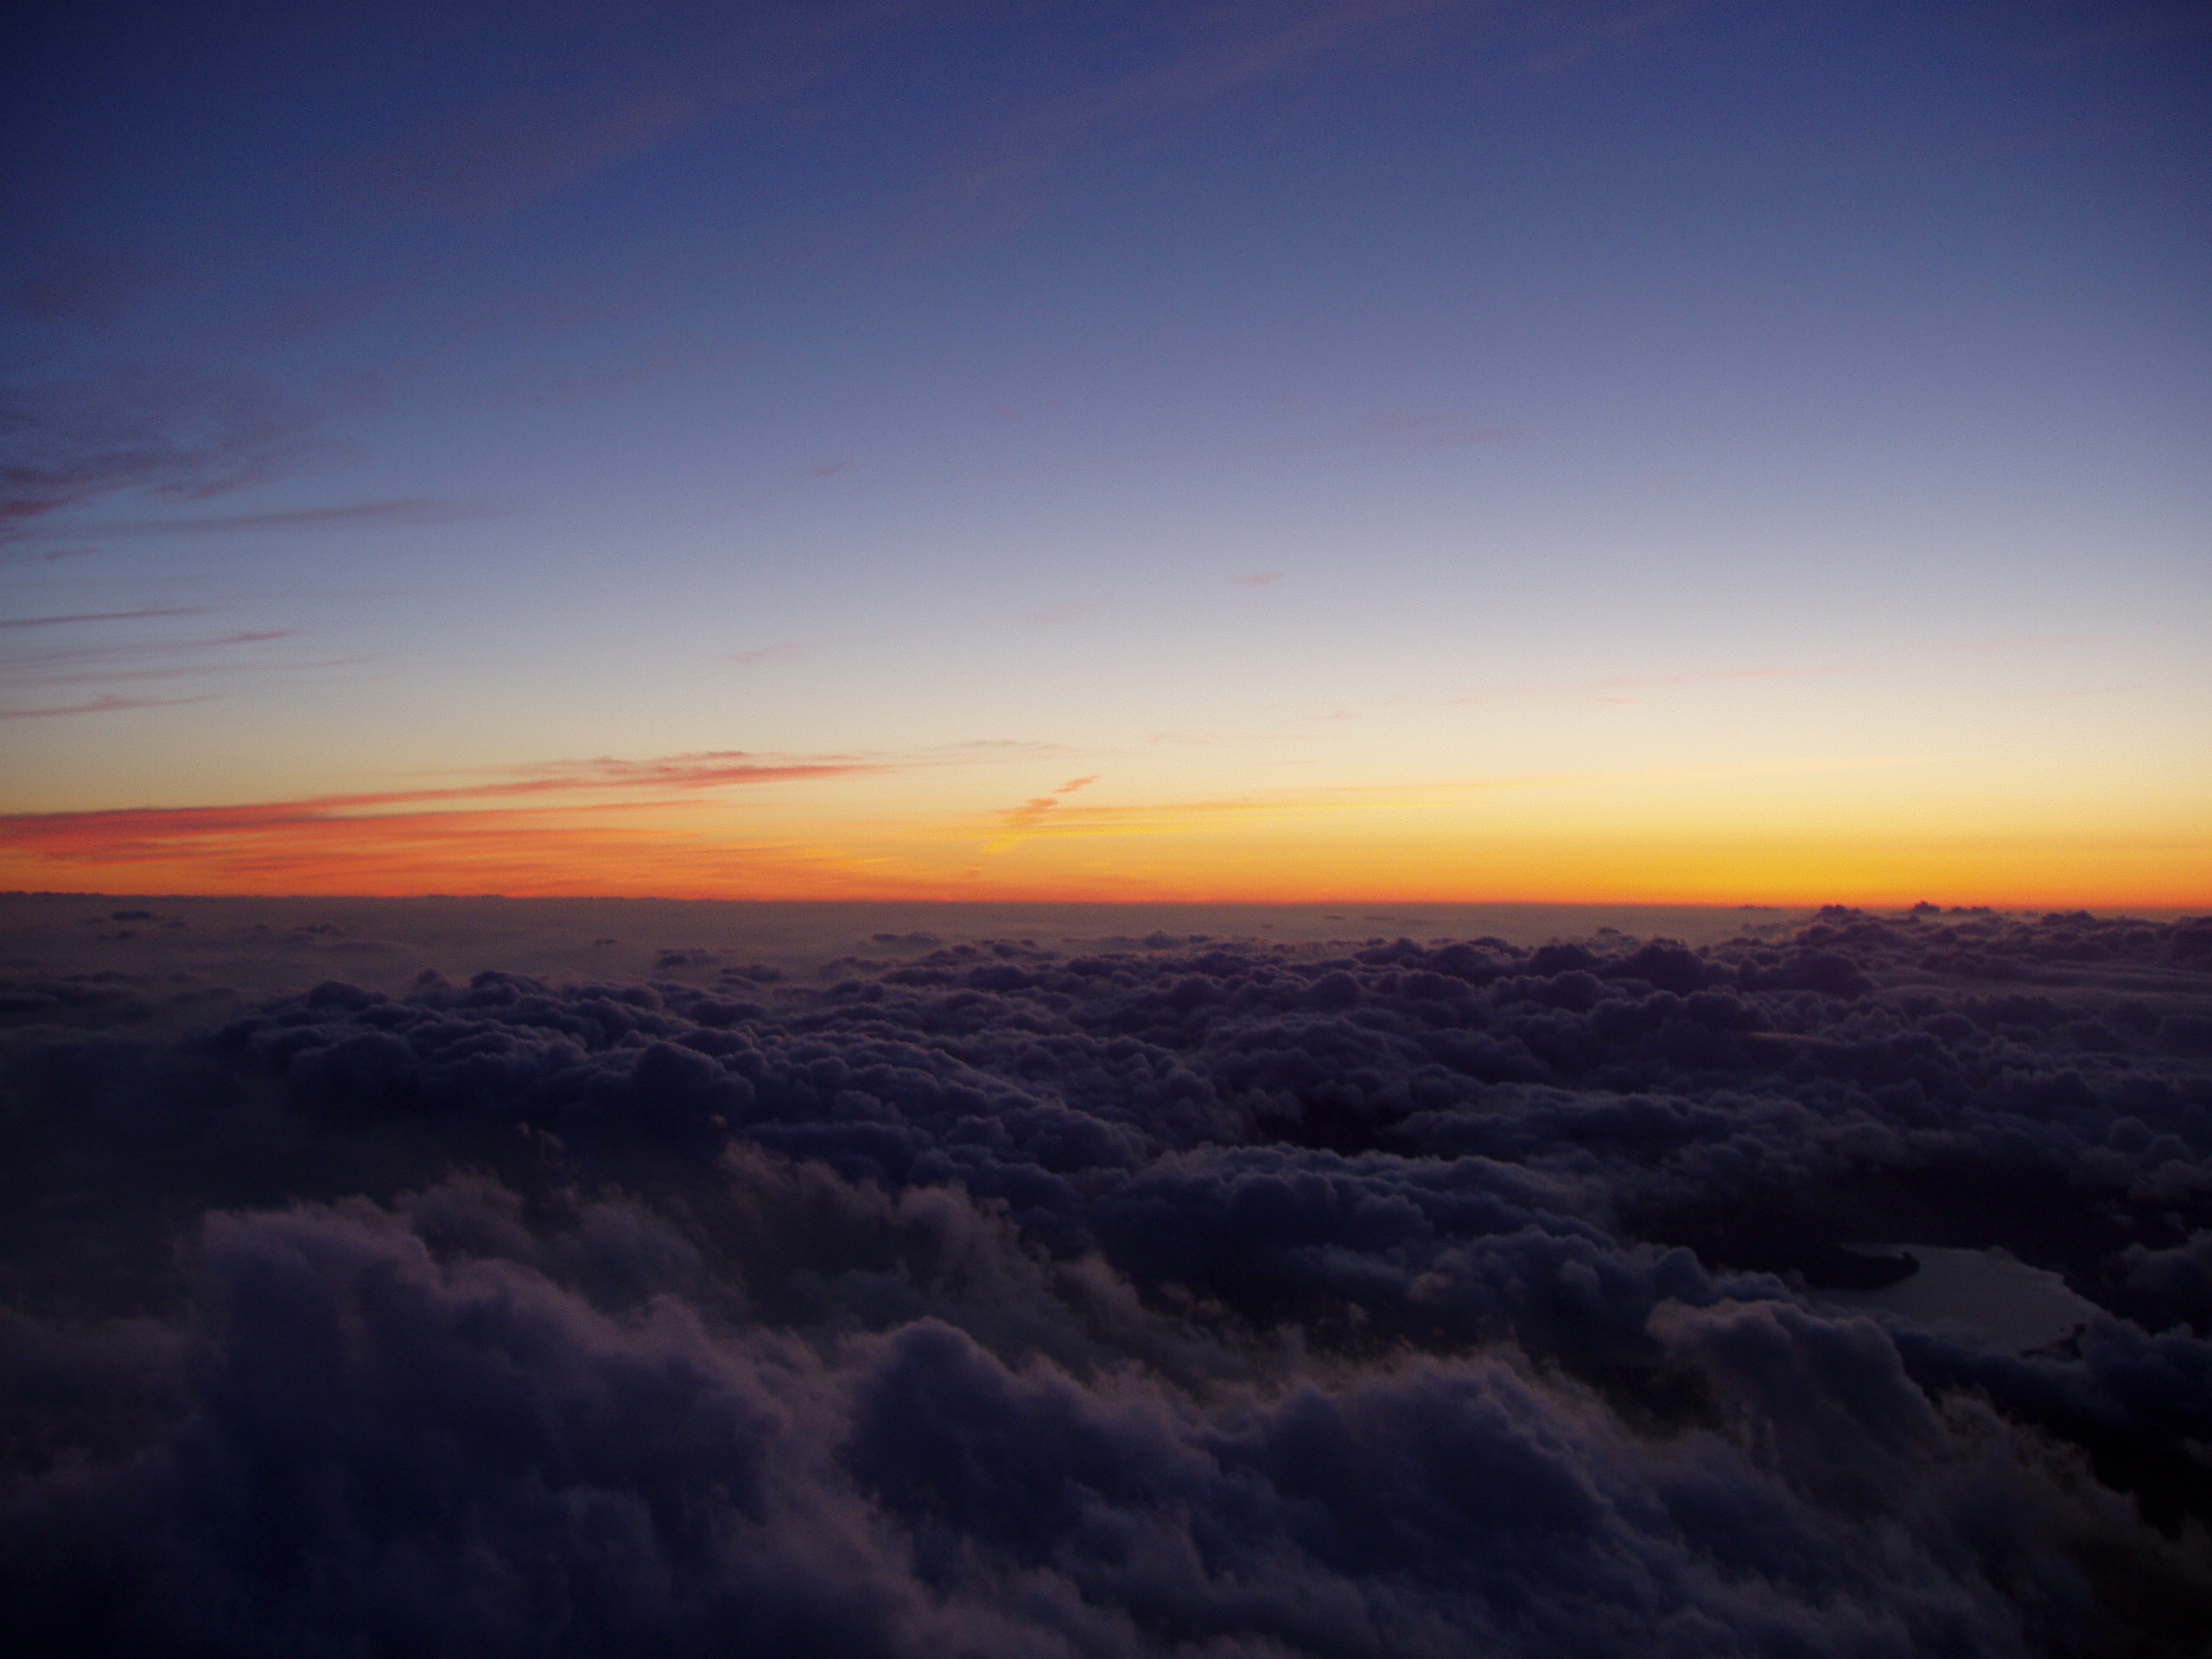 Mount Fuji Ascent
Sunrise at summit - © Jim Holland